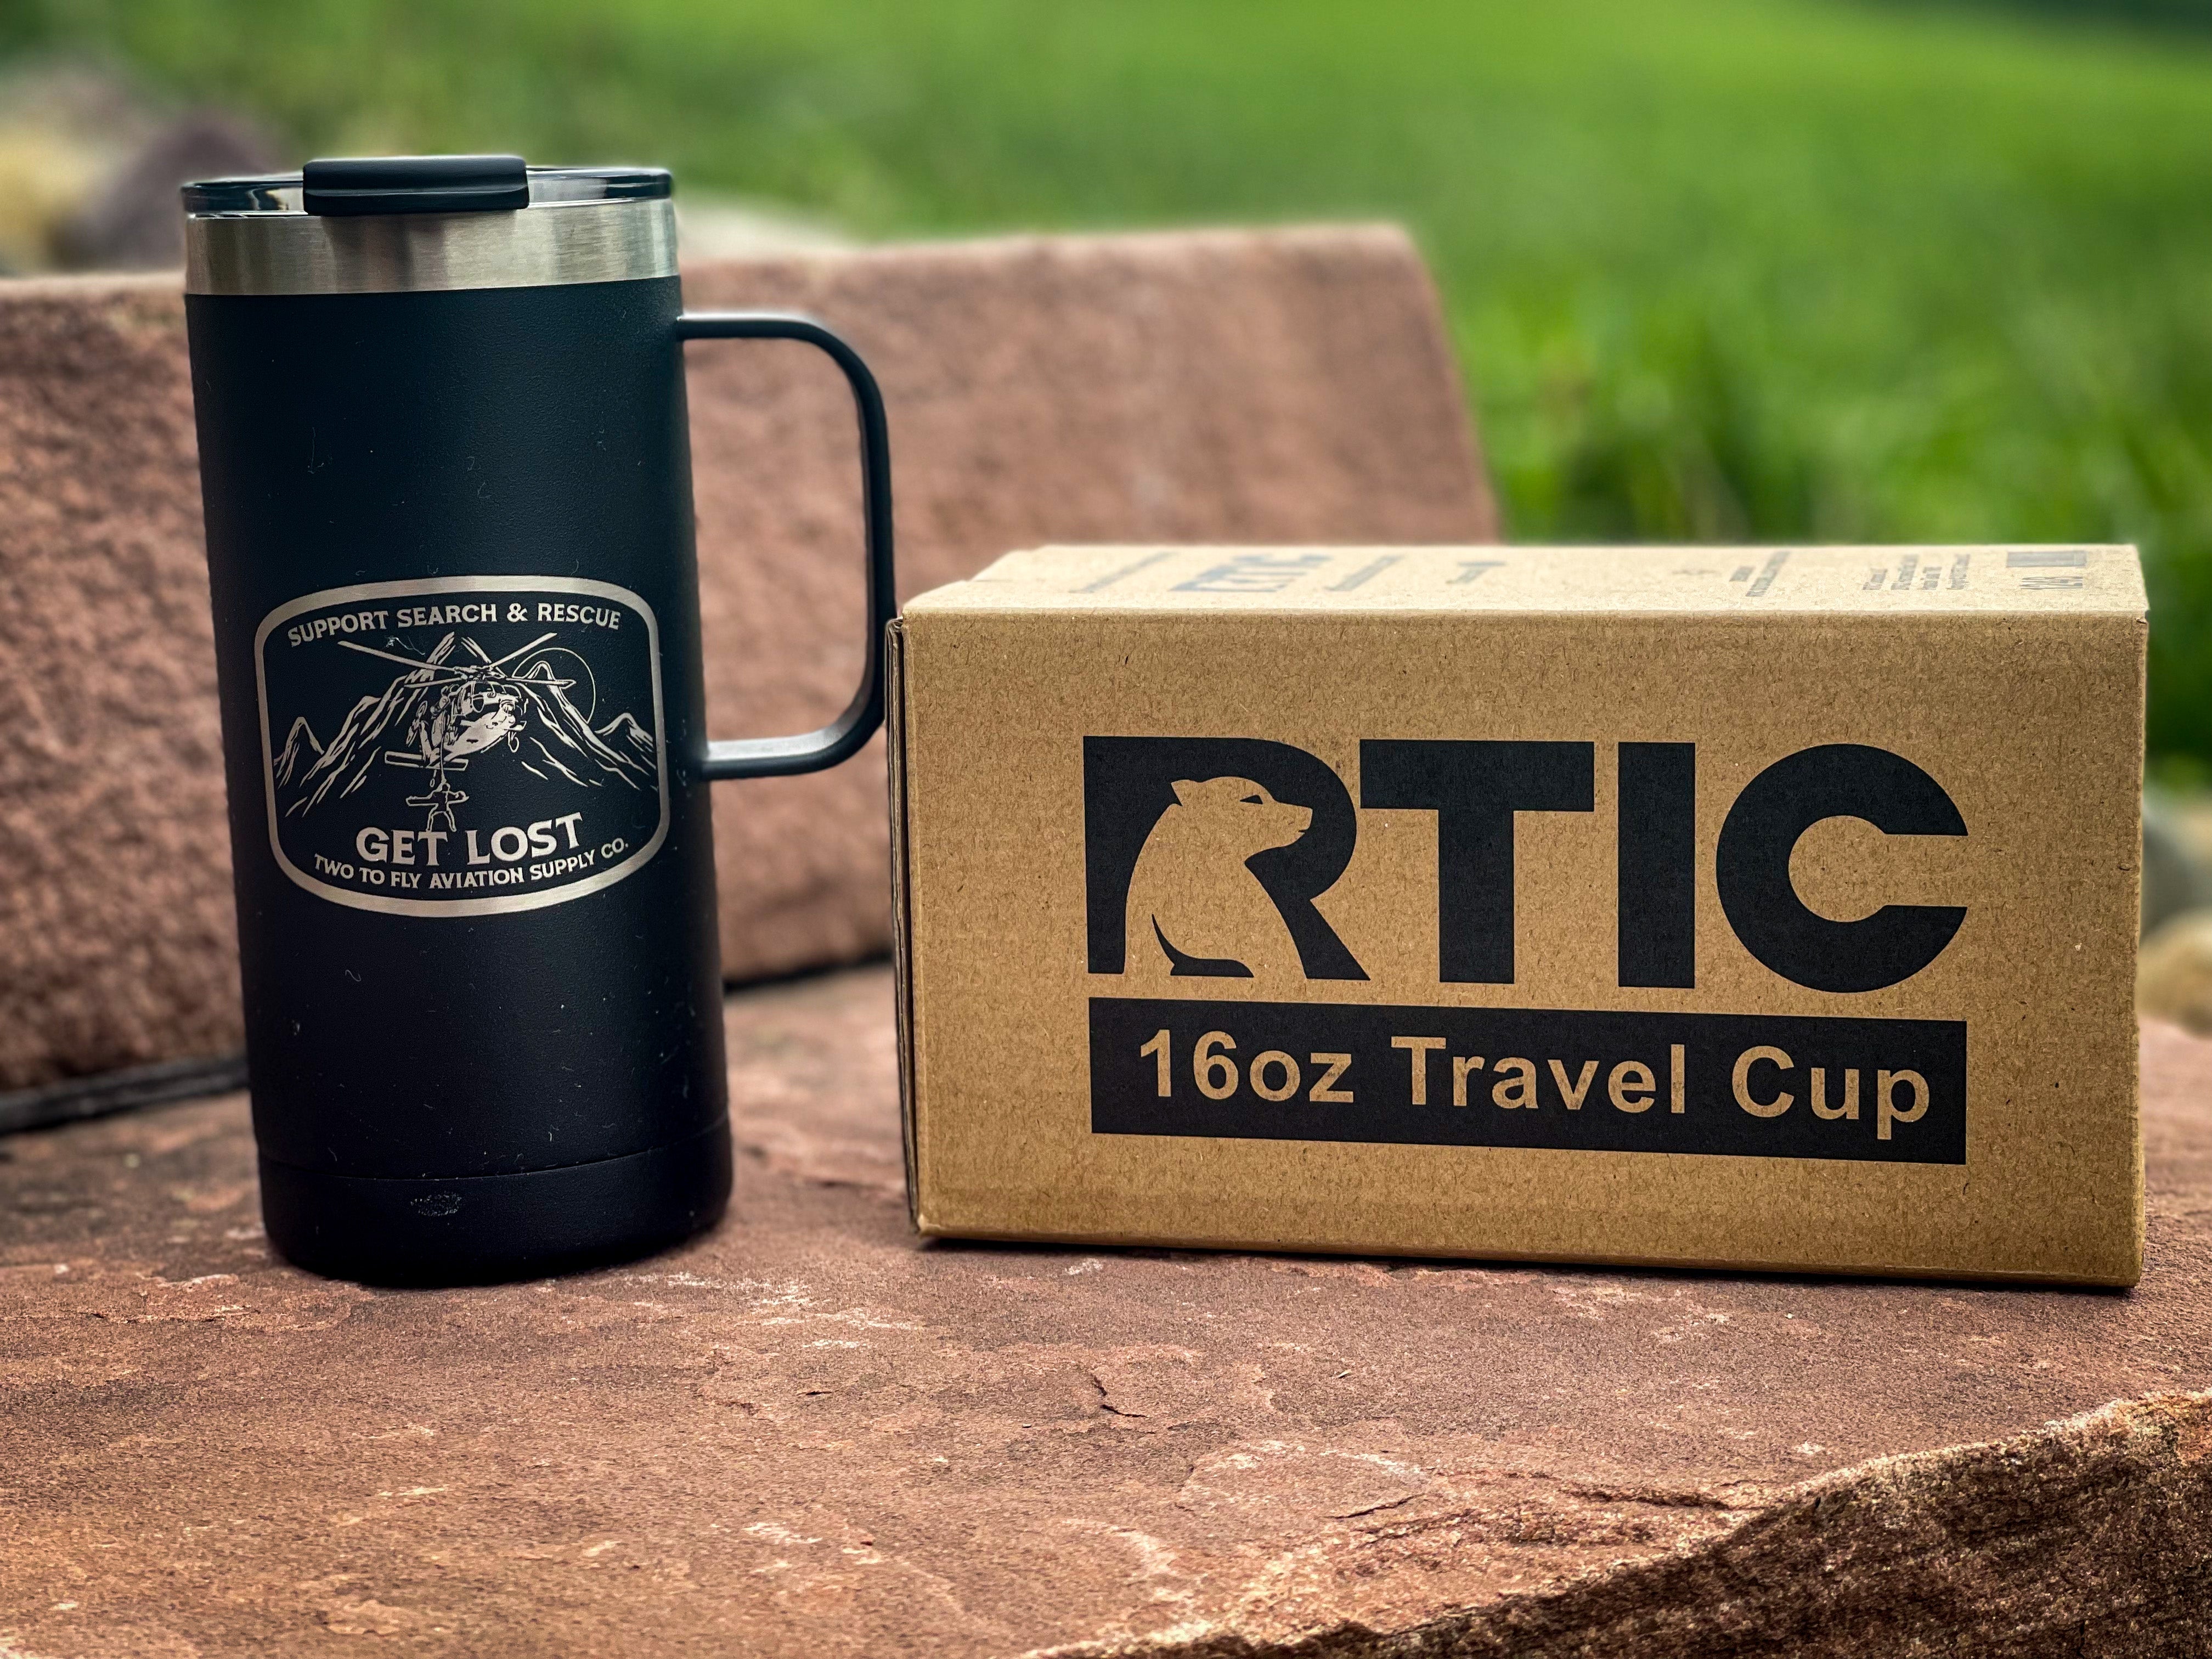 RTIC 16oz Travel Coffee Cups